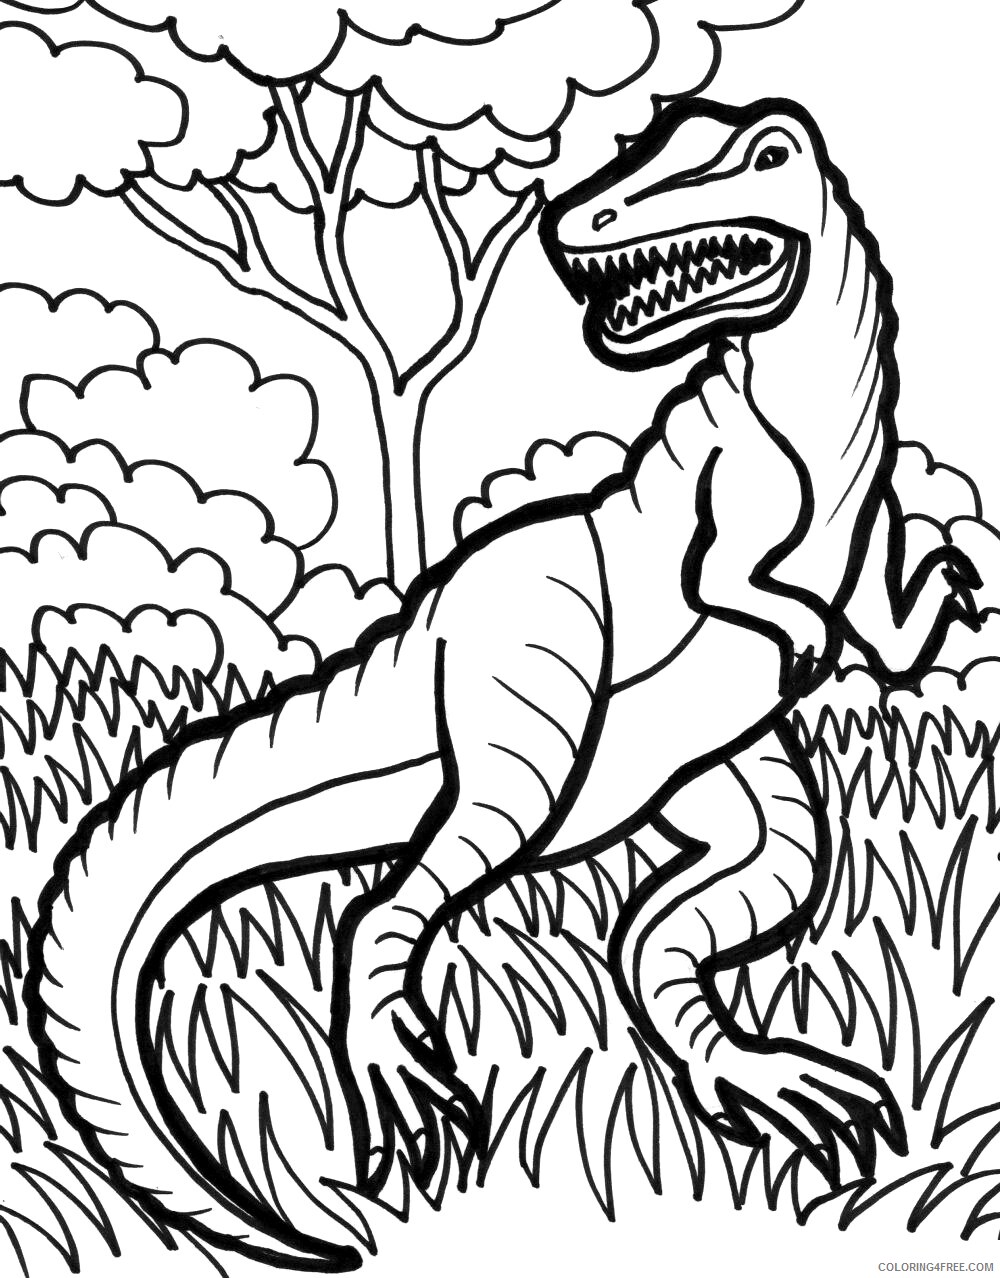 Tyrannosaurus Rex Coloring Pages Animal Printable Sheets T Rex Sheets 2021 4926 Coloring4free